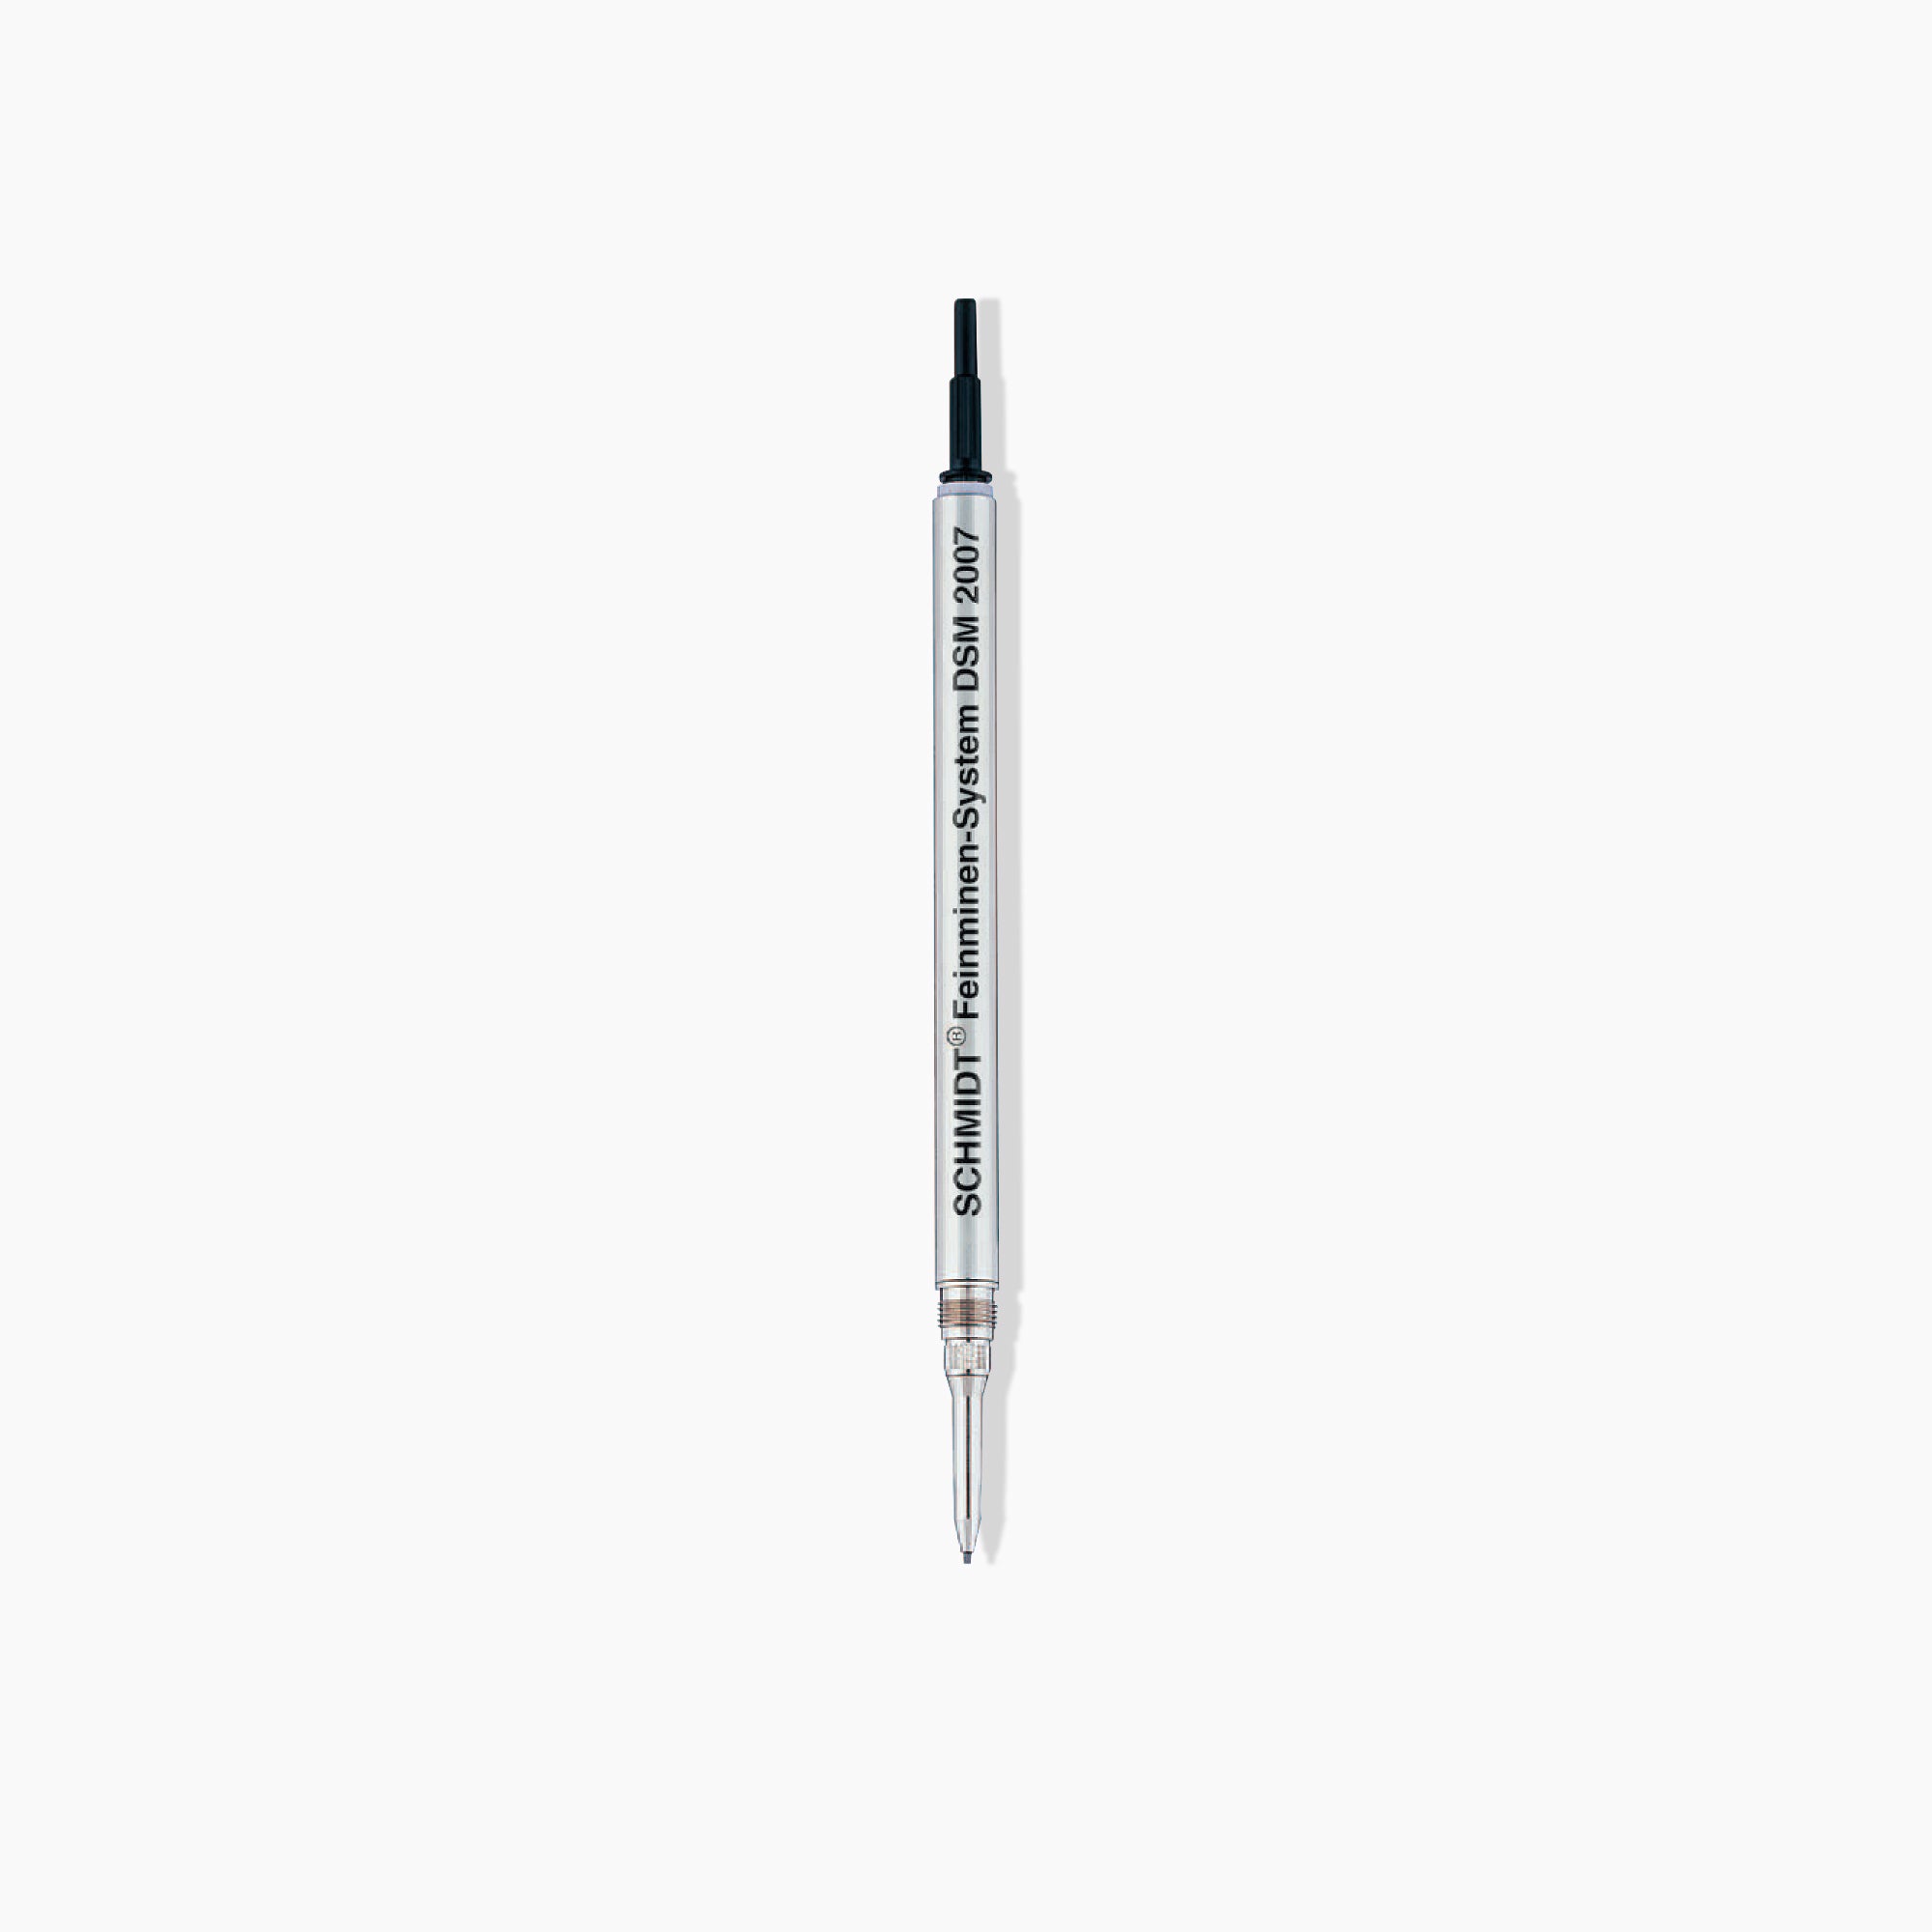 Schmidt DSM2007 Propelling Pencil Mechanism. Available in 0.5mm or 0.7mm lead widths.